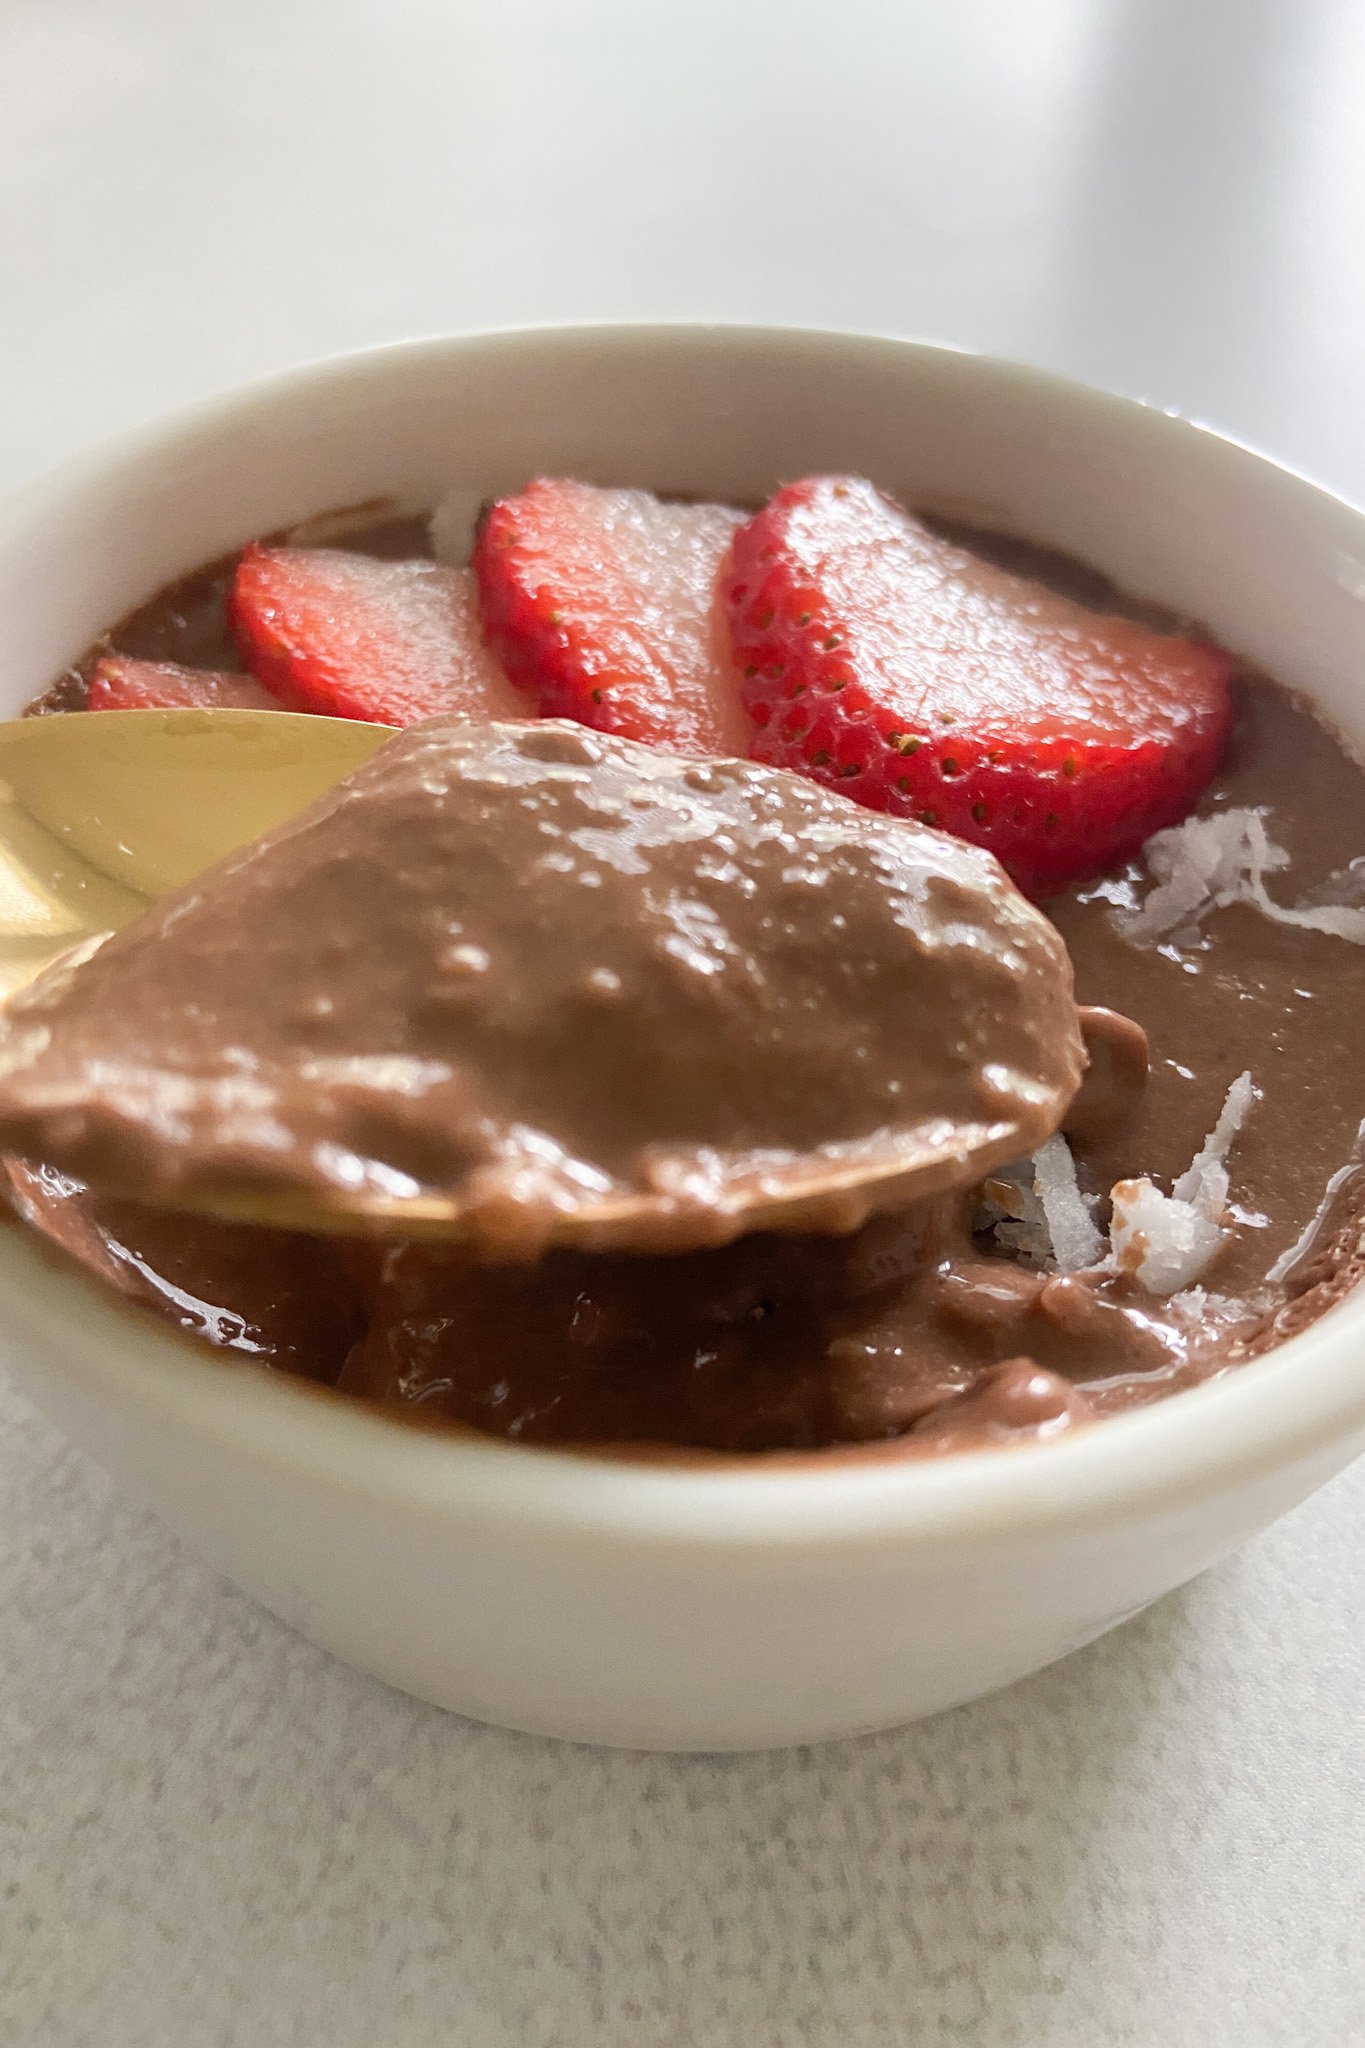 Creamy chocolate oatmeal pudding